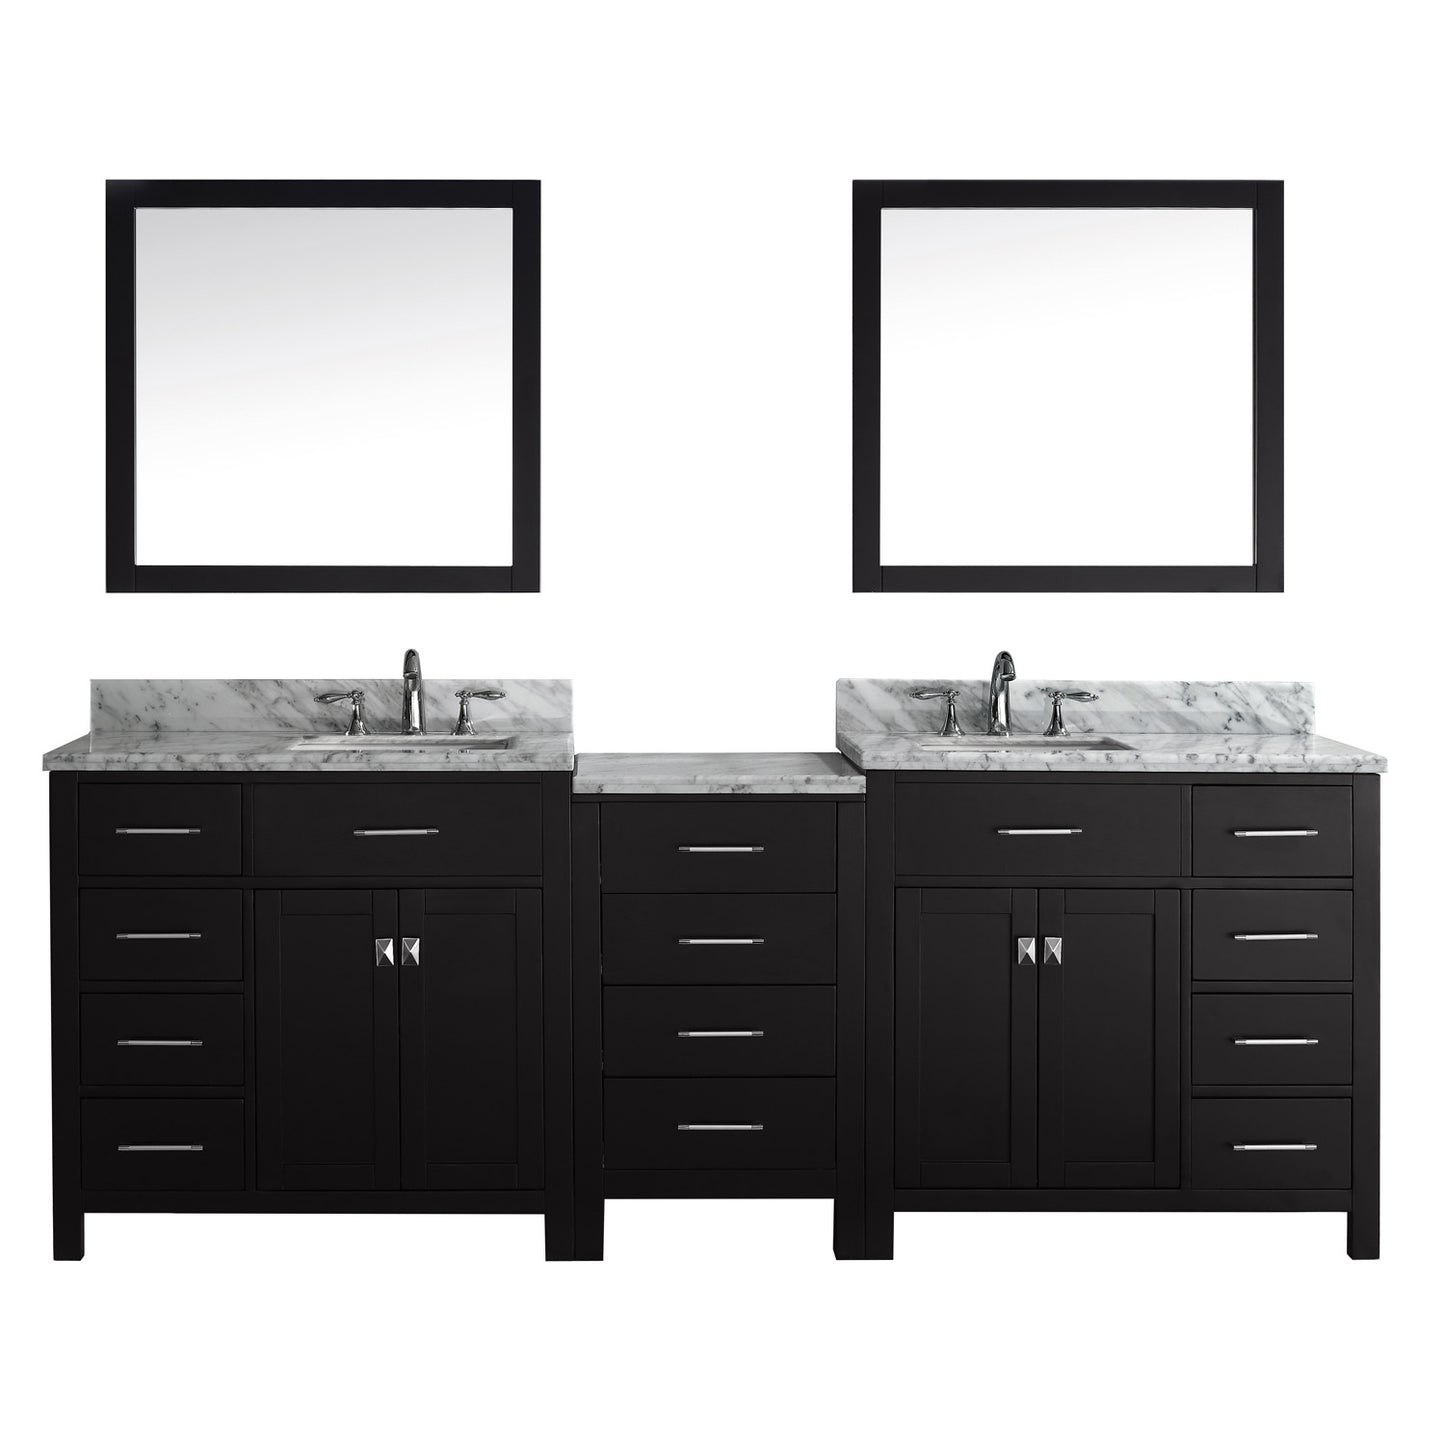 Virtu USA Caroline Parkway 93" Double Bath Vanity in Espresso with Marble Top and Square Sink with Mirrors - Luxe Bathroom Vanities Luxury Bathroom Fixtures Bathroom Furniture